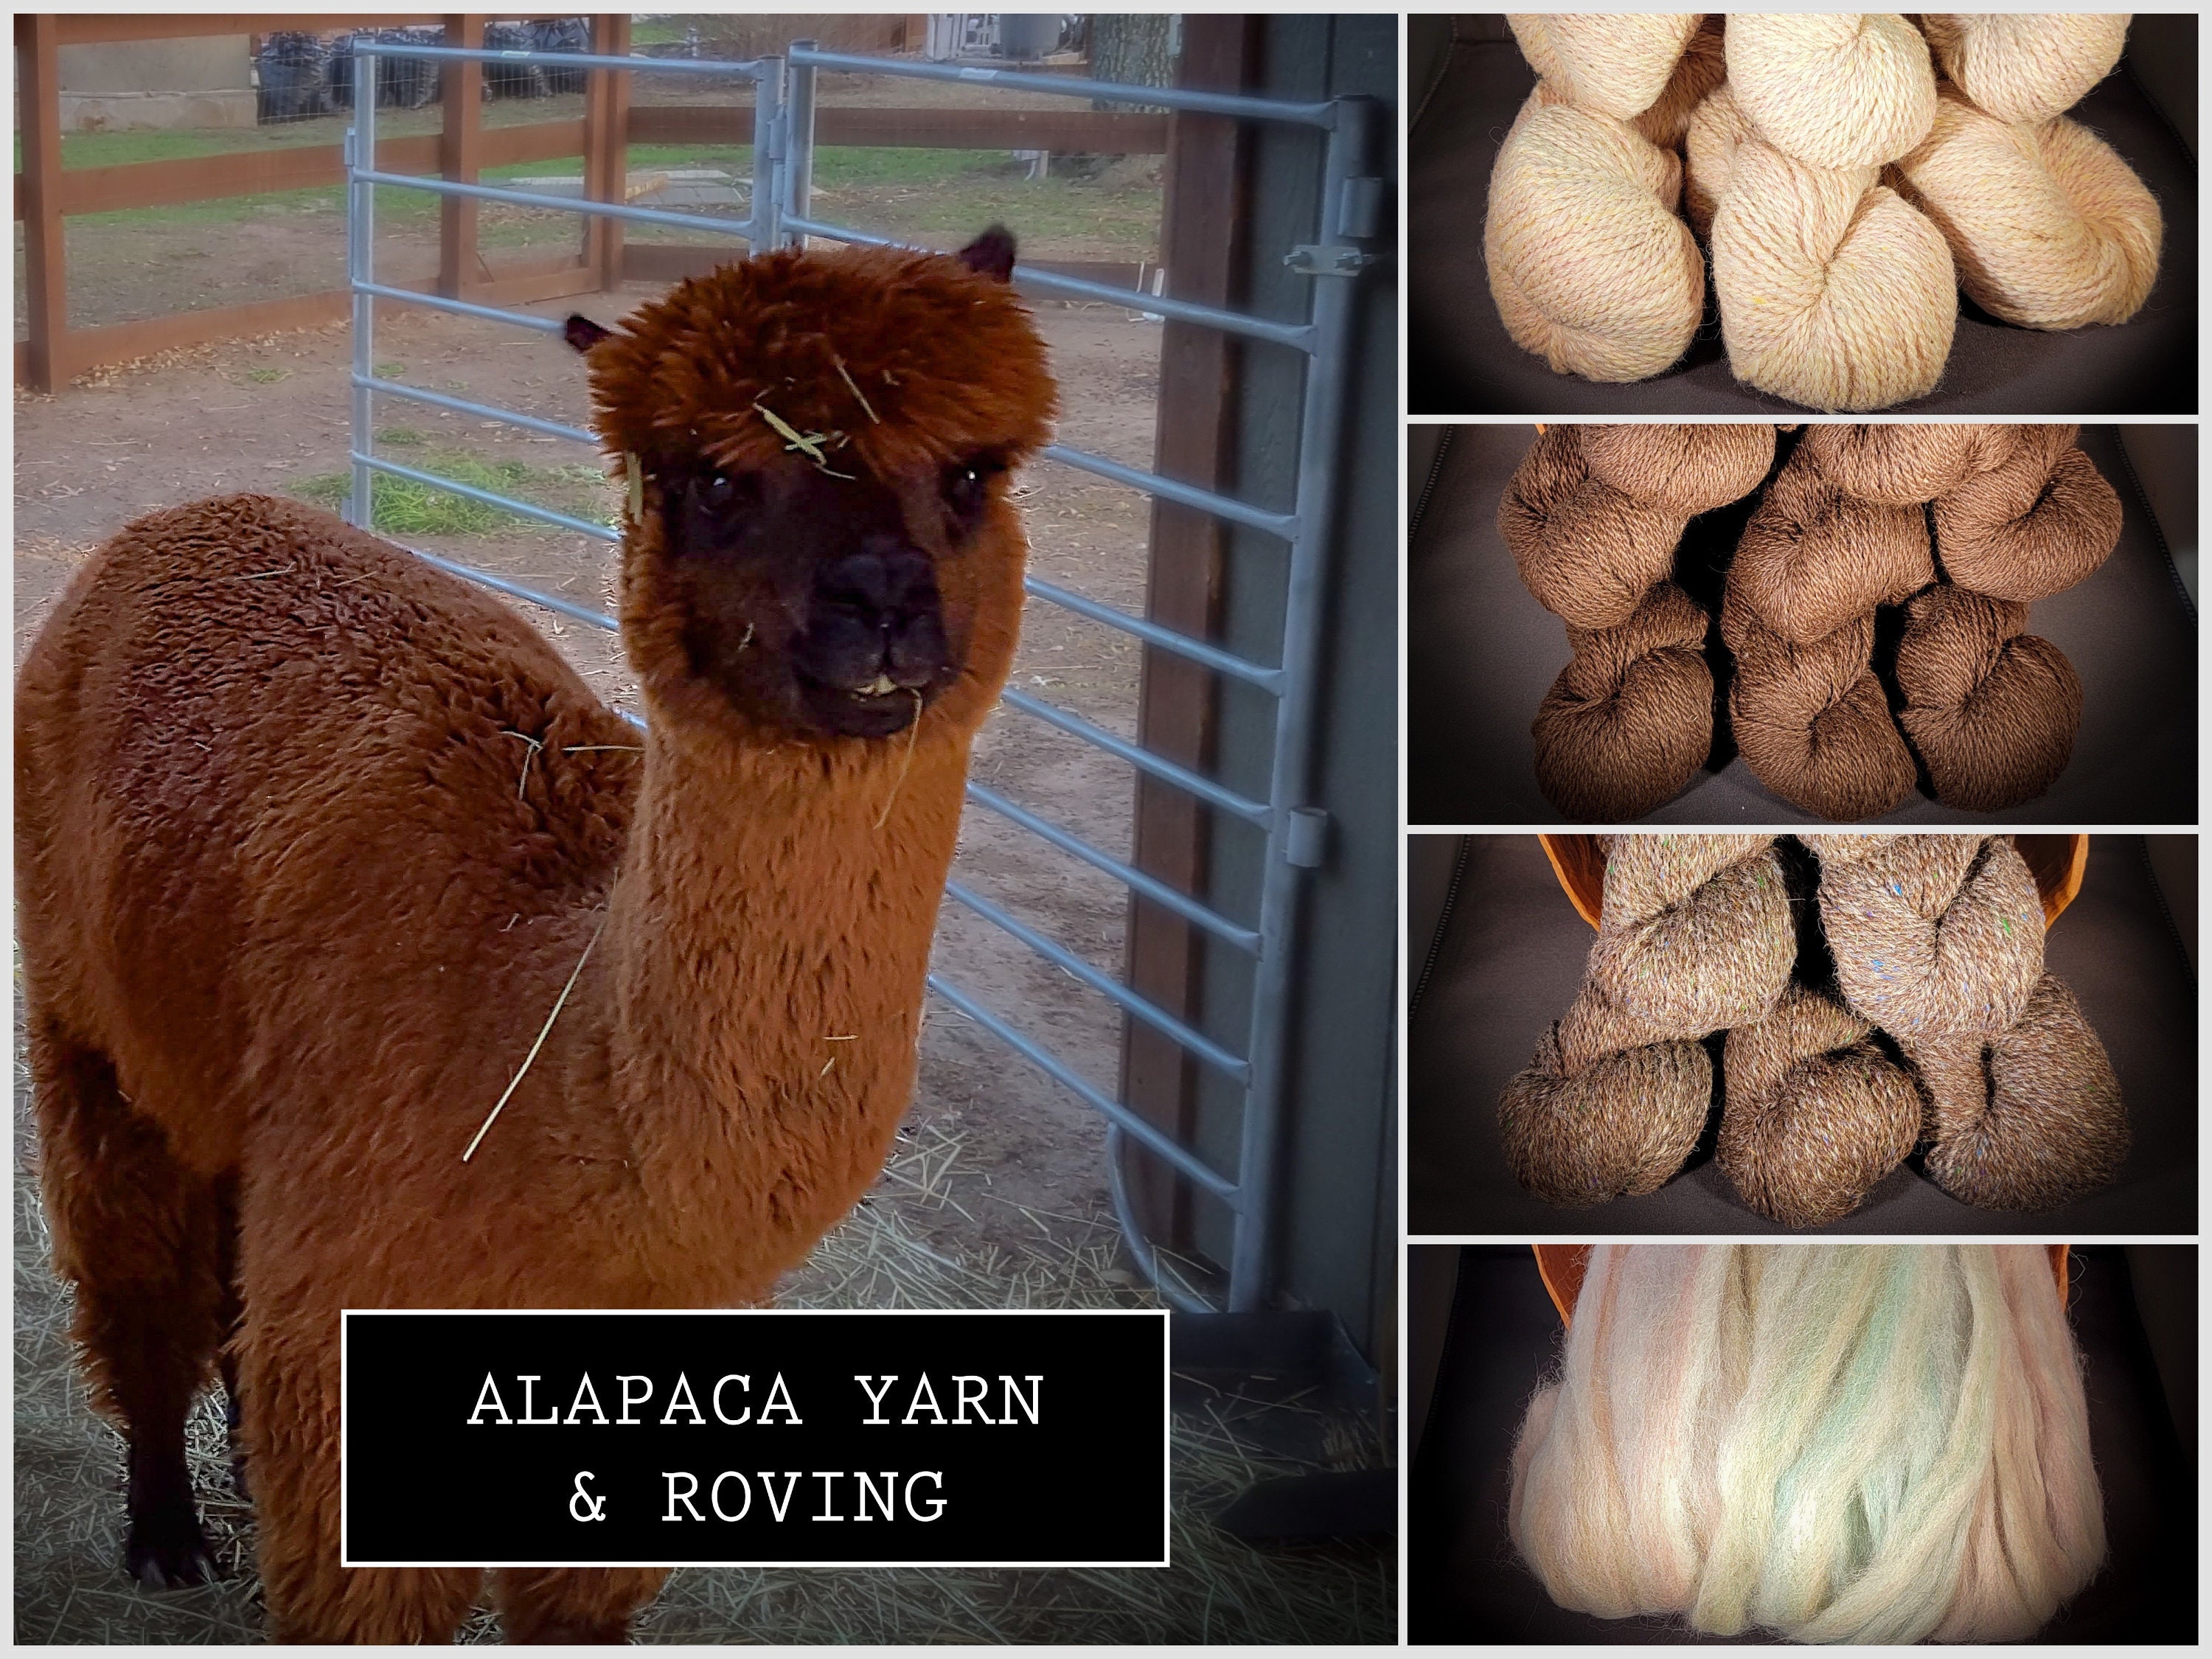 Ode Alpaca Weaving Yarn - SweetGeorgia Yarns